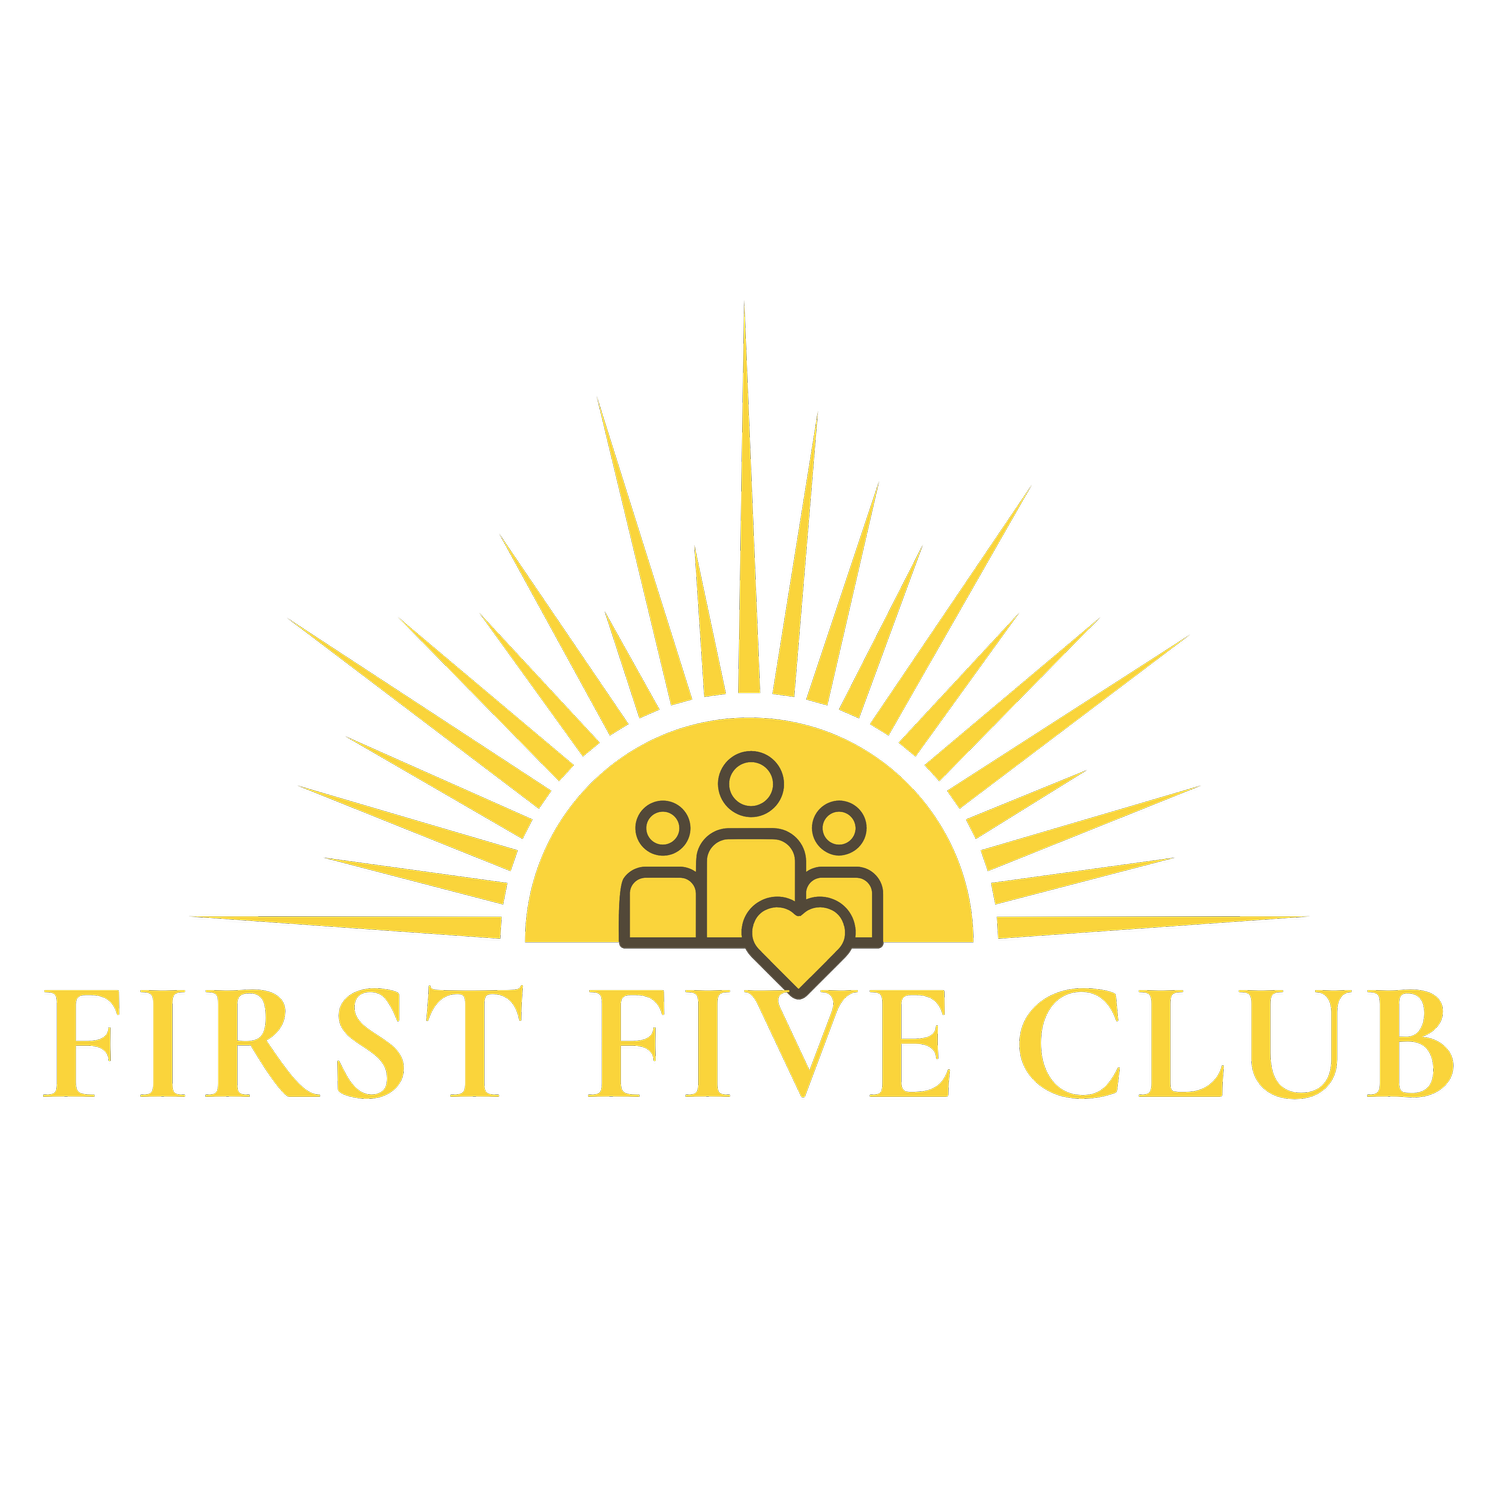 FIRST FIVE CLUB